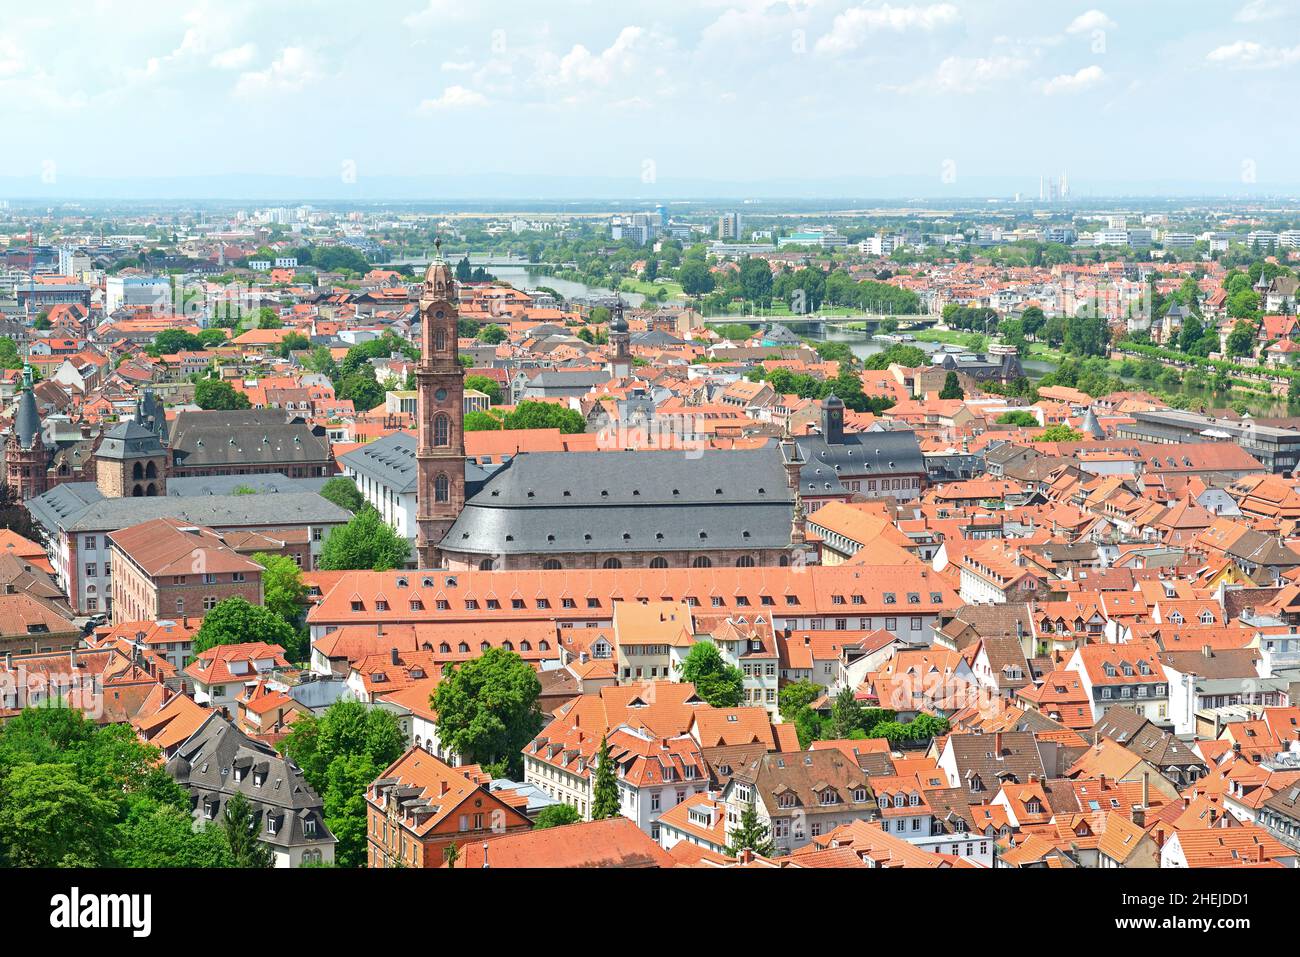 City of Heidelberg. Germany Stock Photo